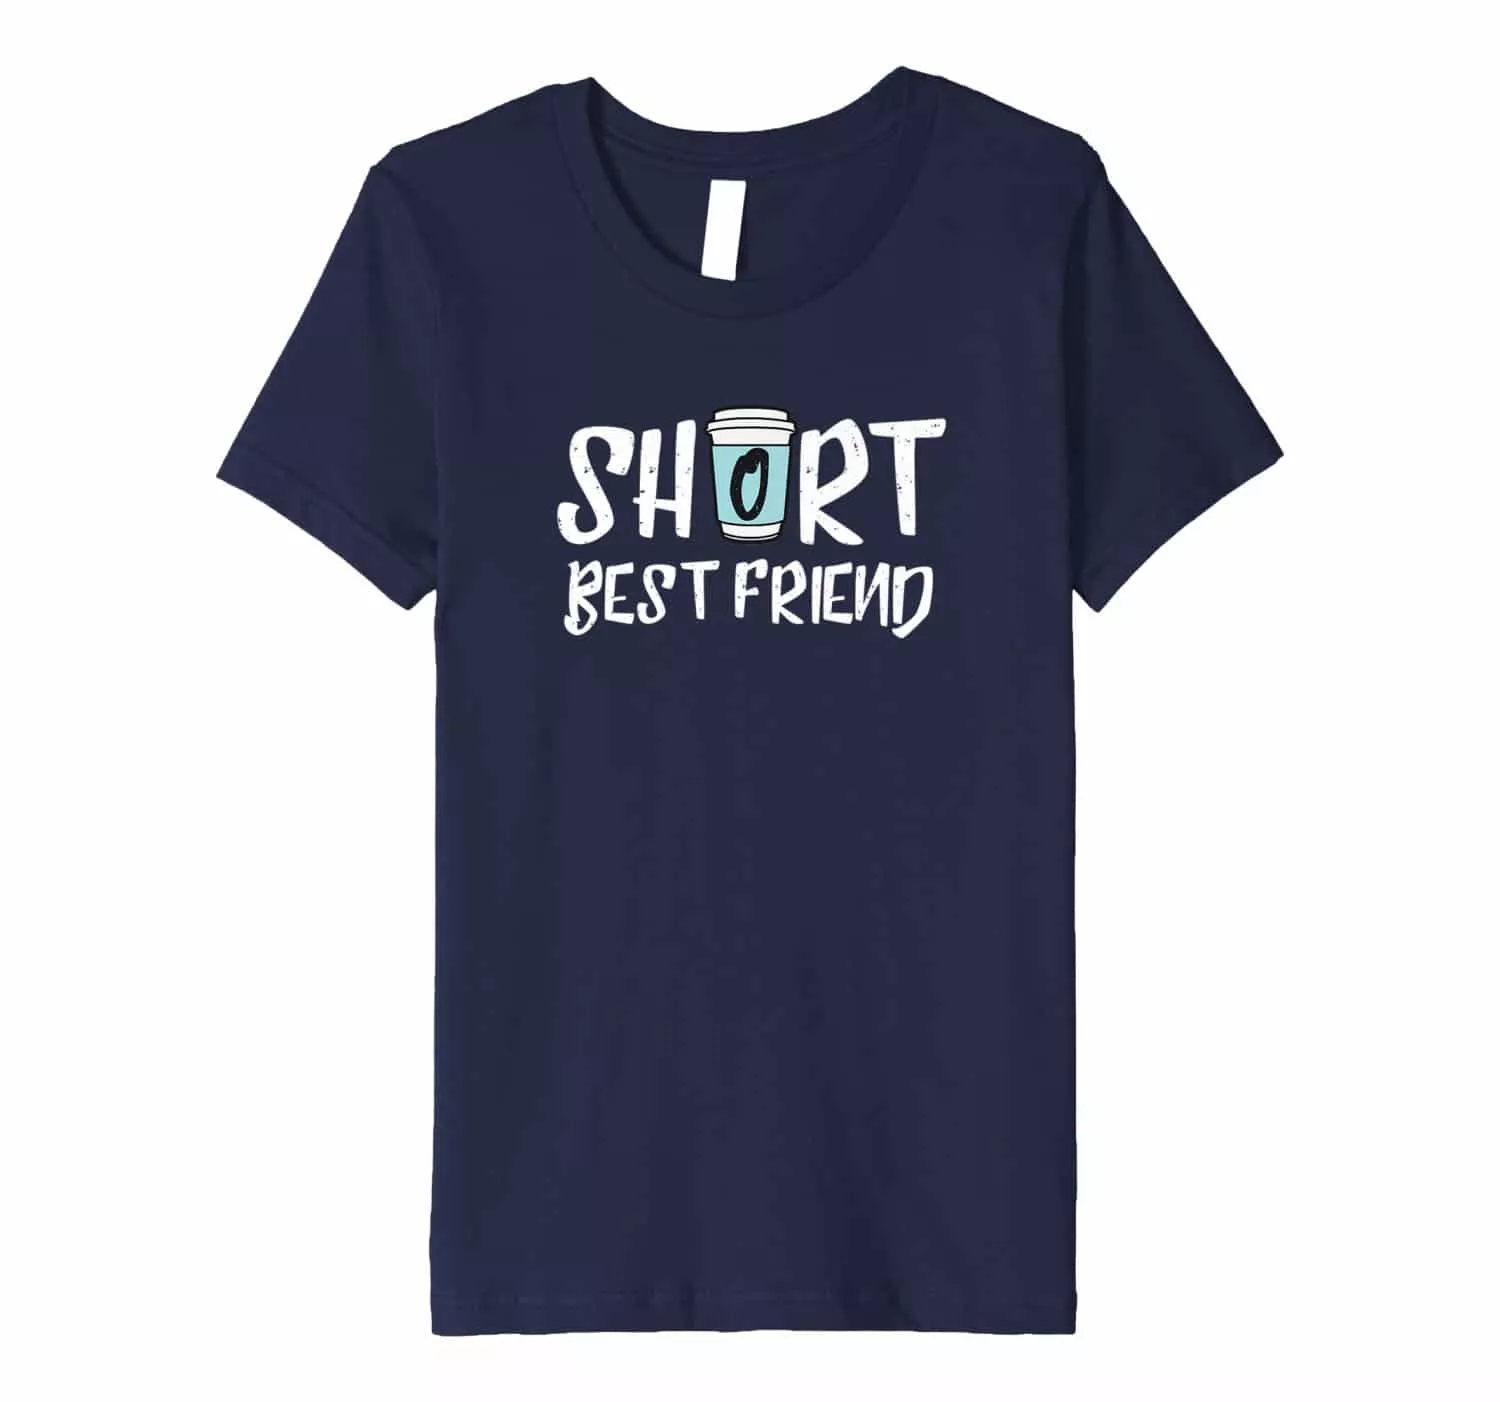 Funny Best Friend Shirts 2018: The Short Friend T-Shirt